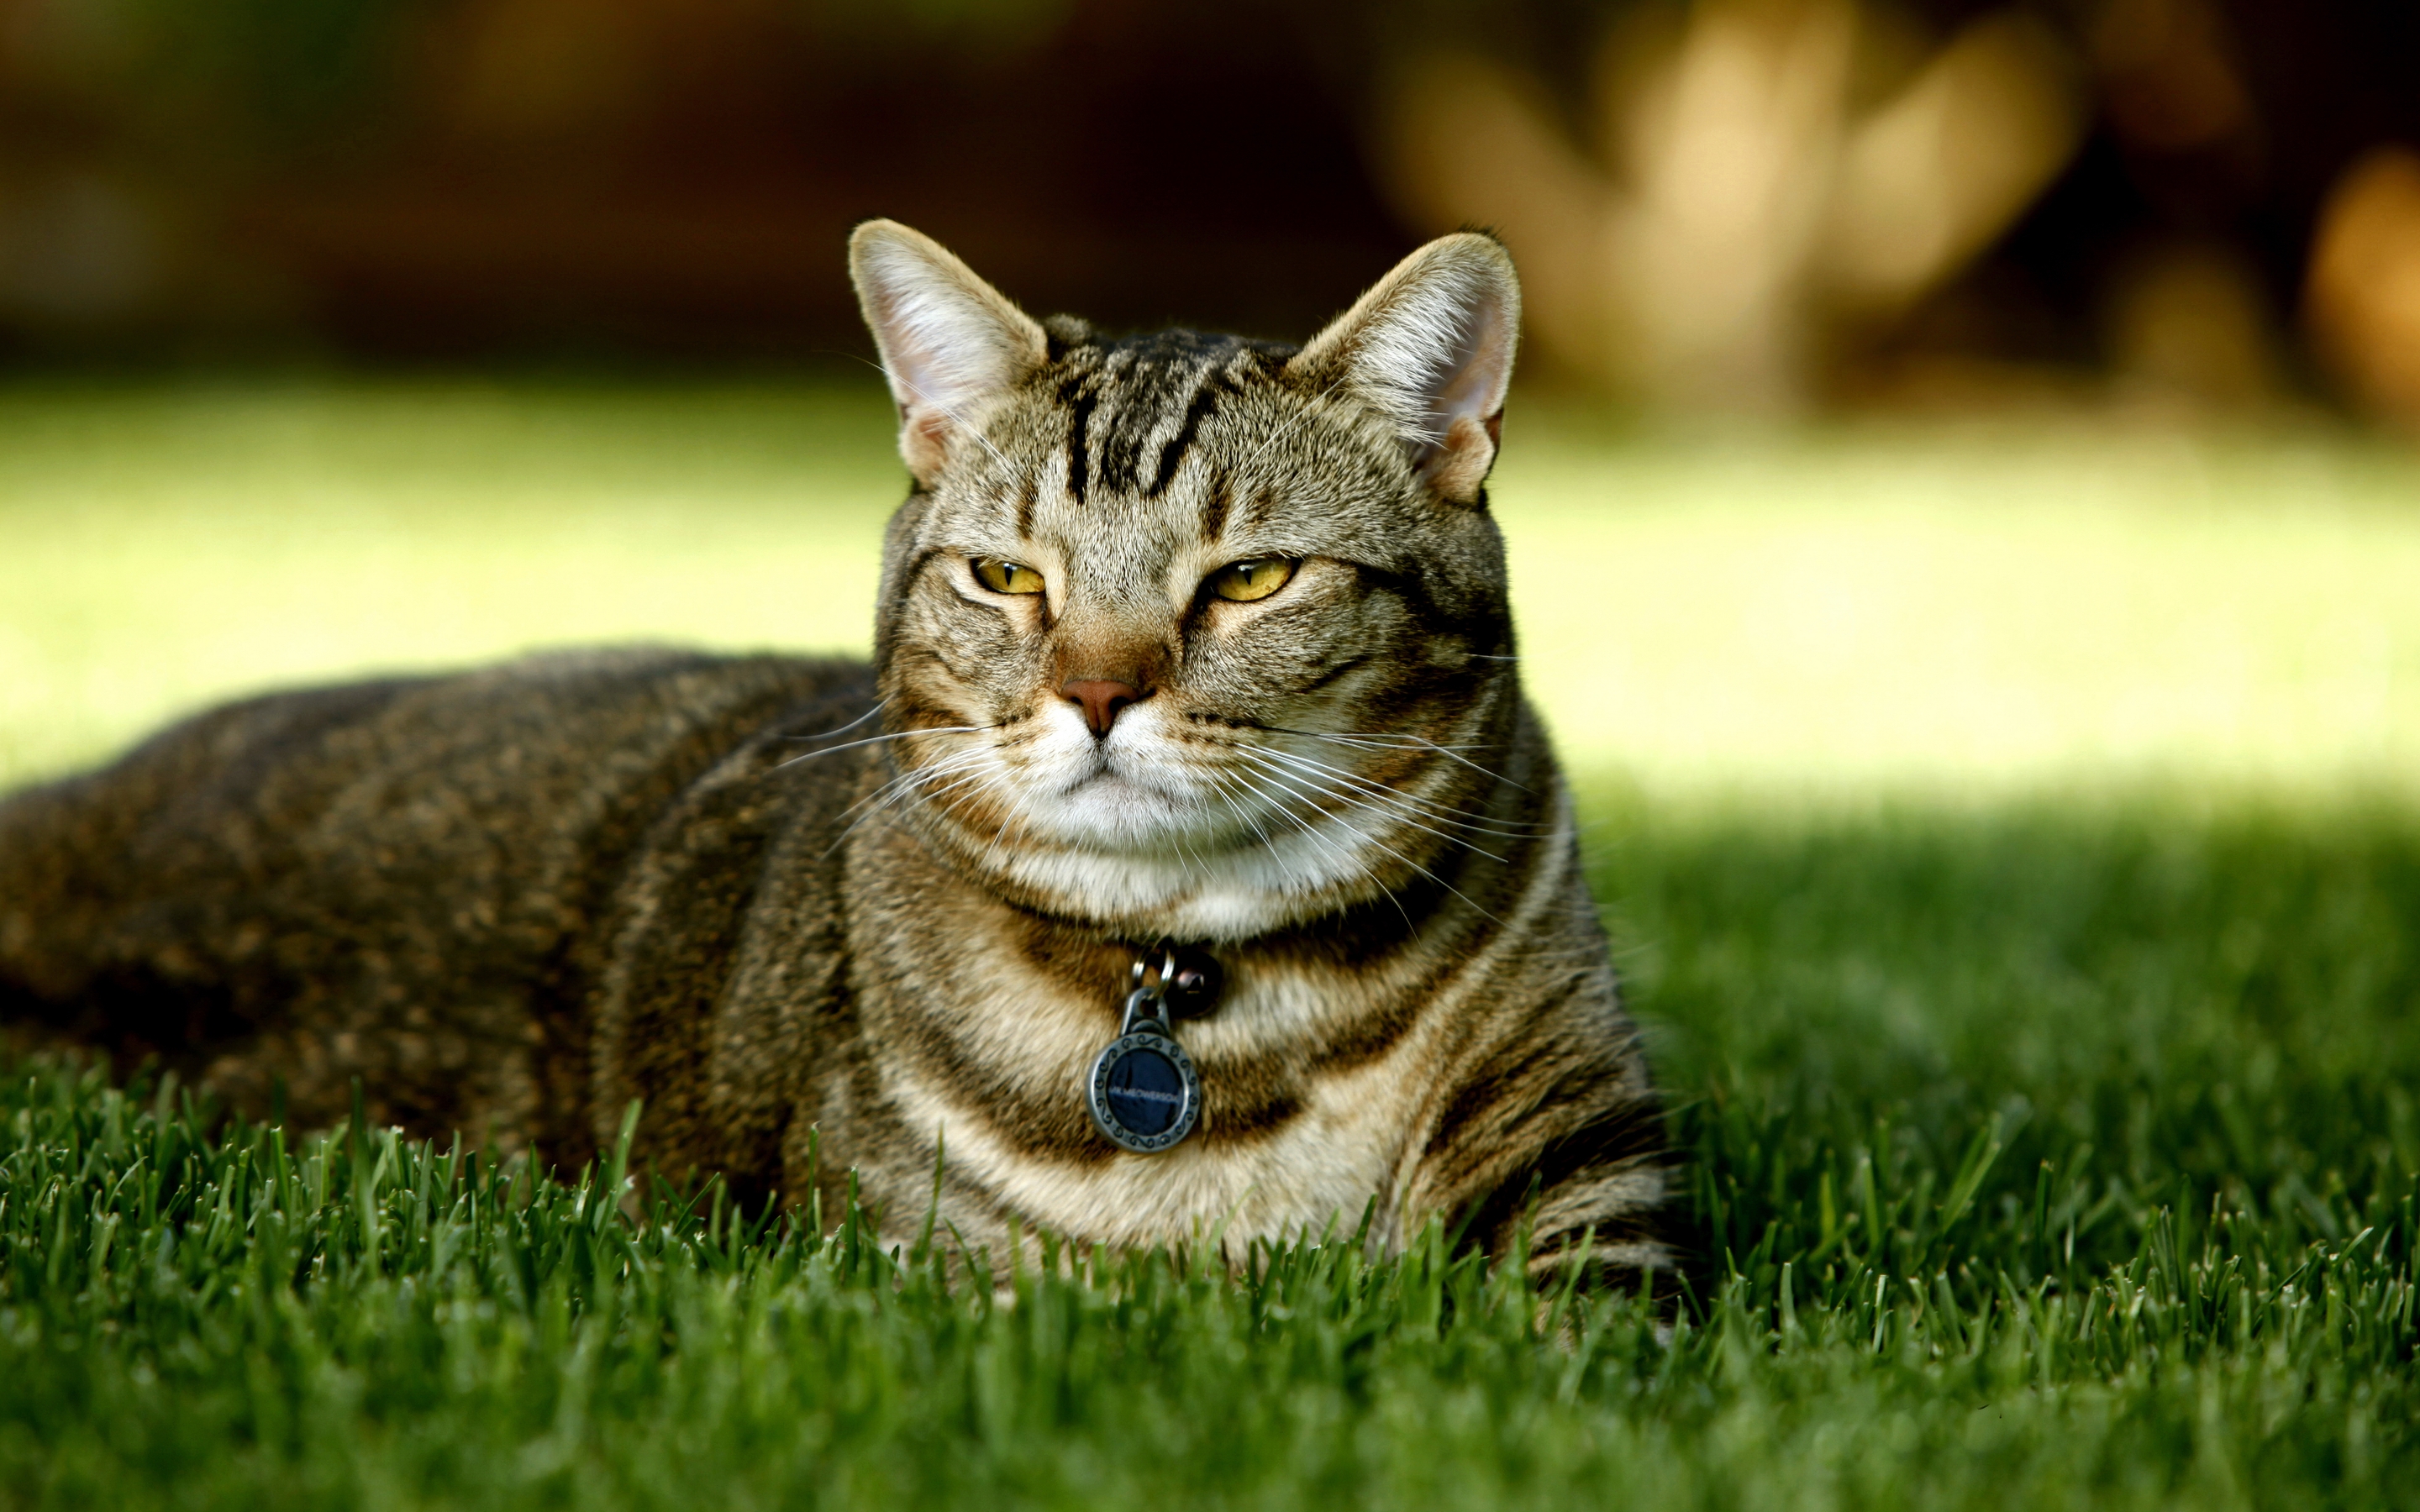 Image: Cat, lies, grass, medallion, collar, muzzle